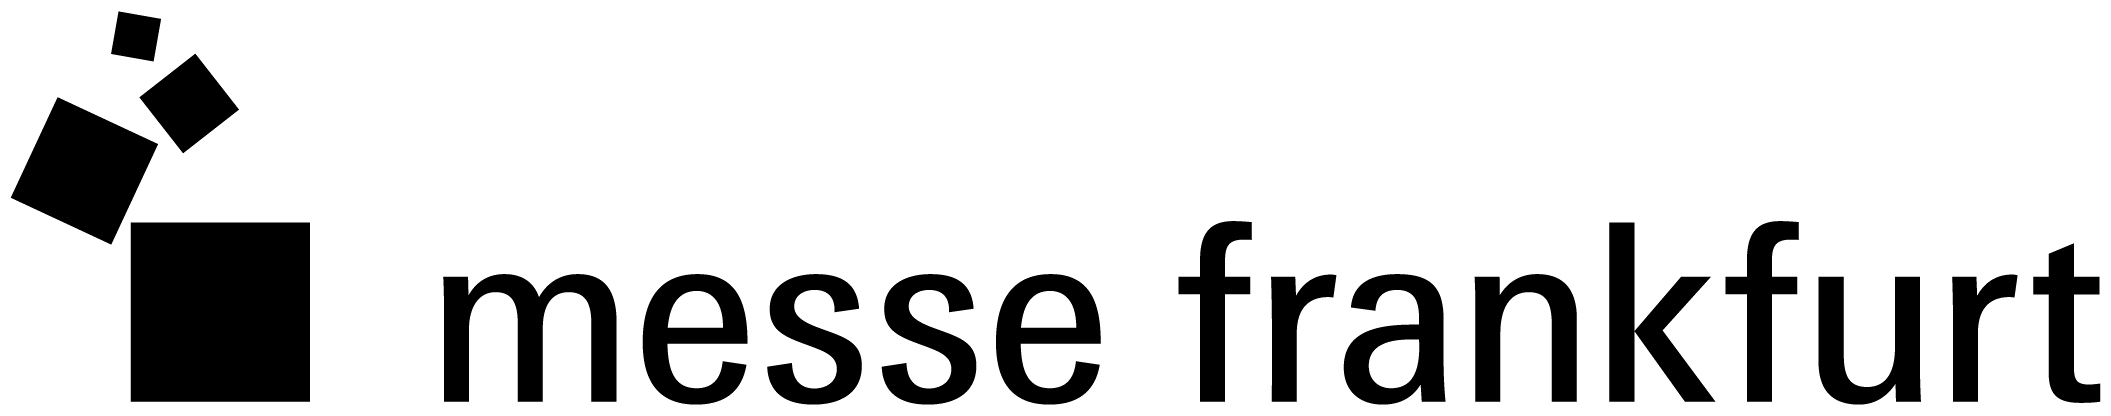 Messe Frankfurt B&W Logo